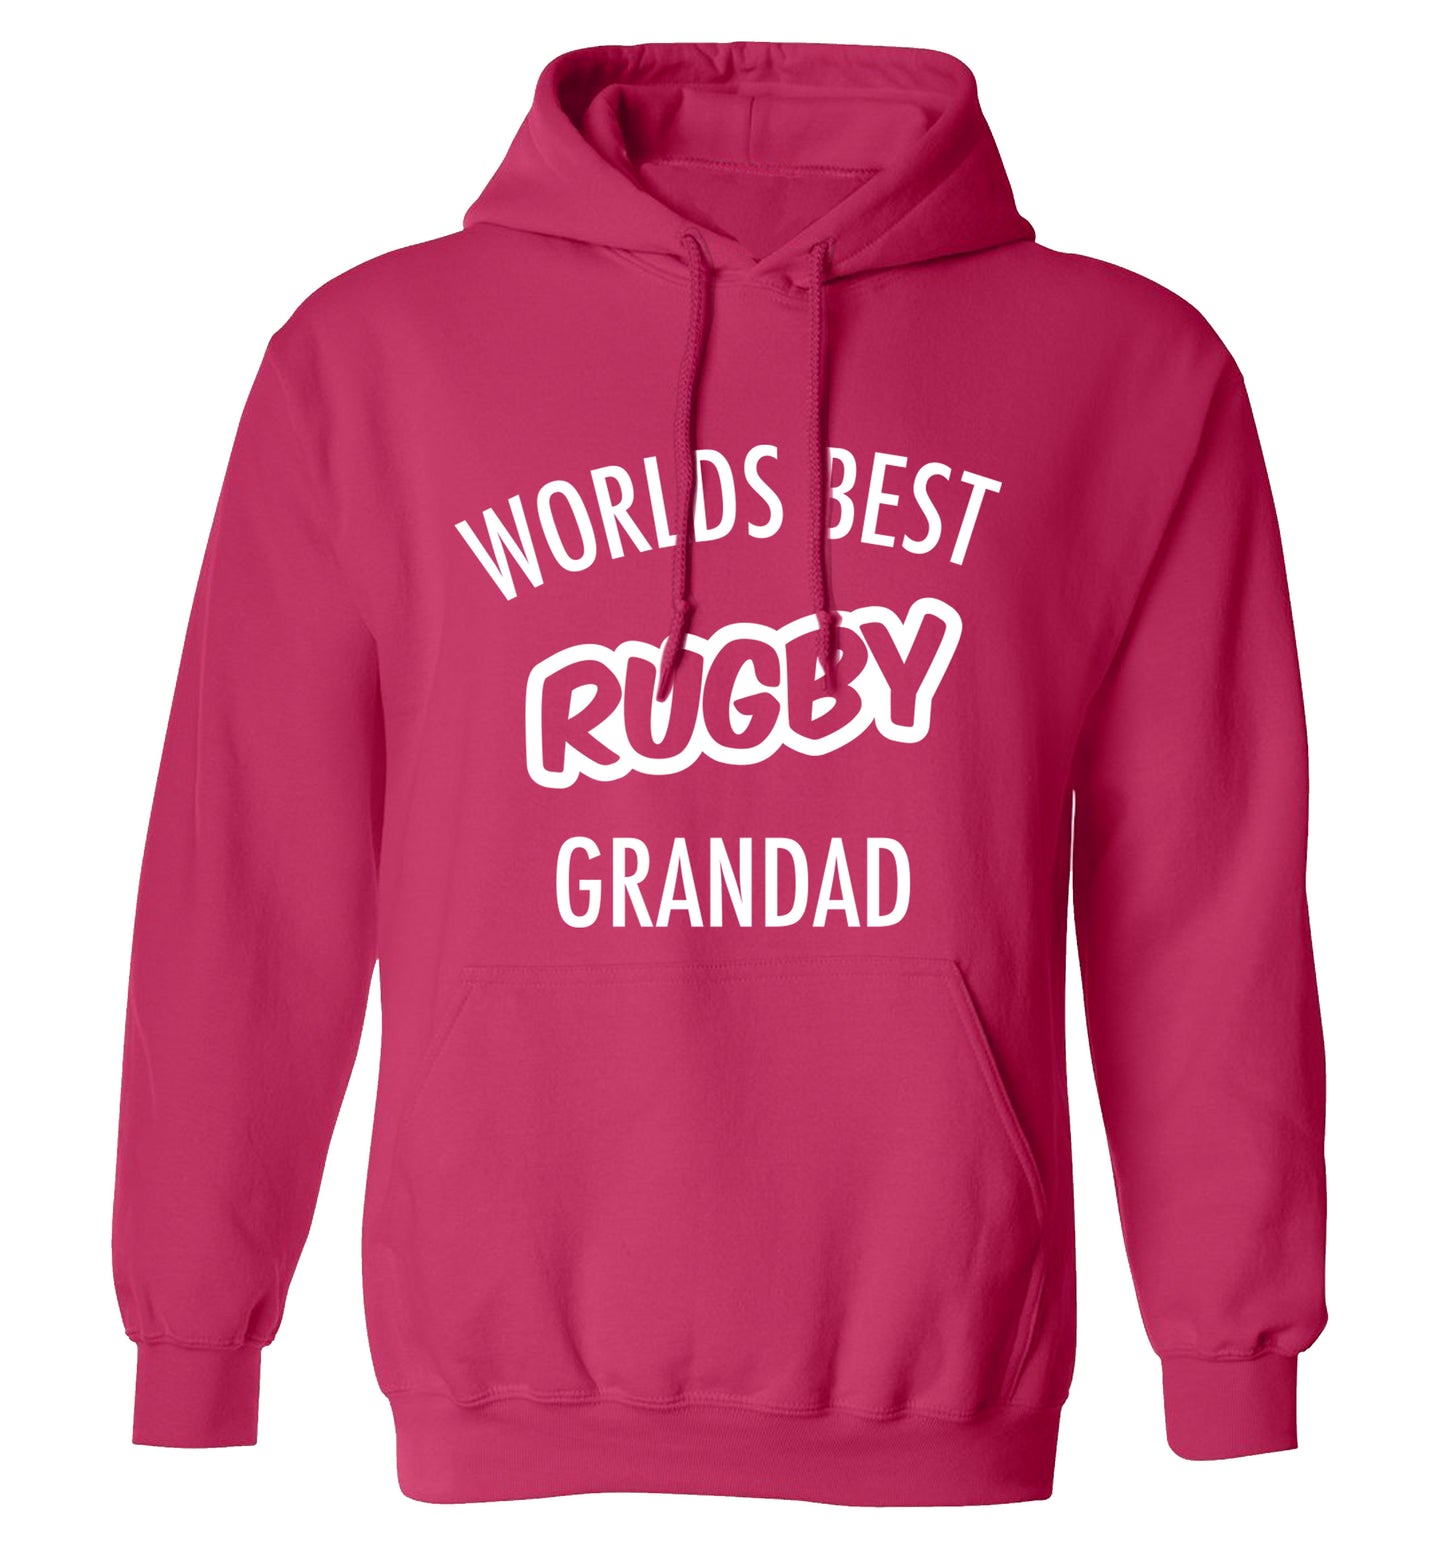 Worlds best rugby grandad adults unisex pink hoodie 2XL